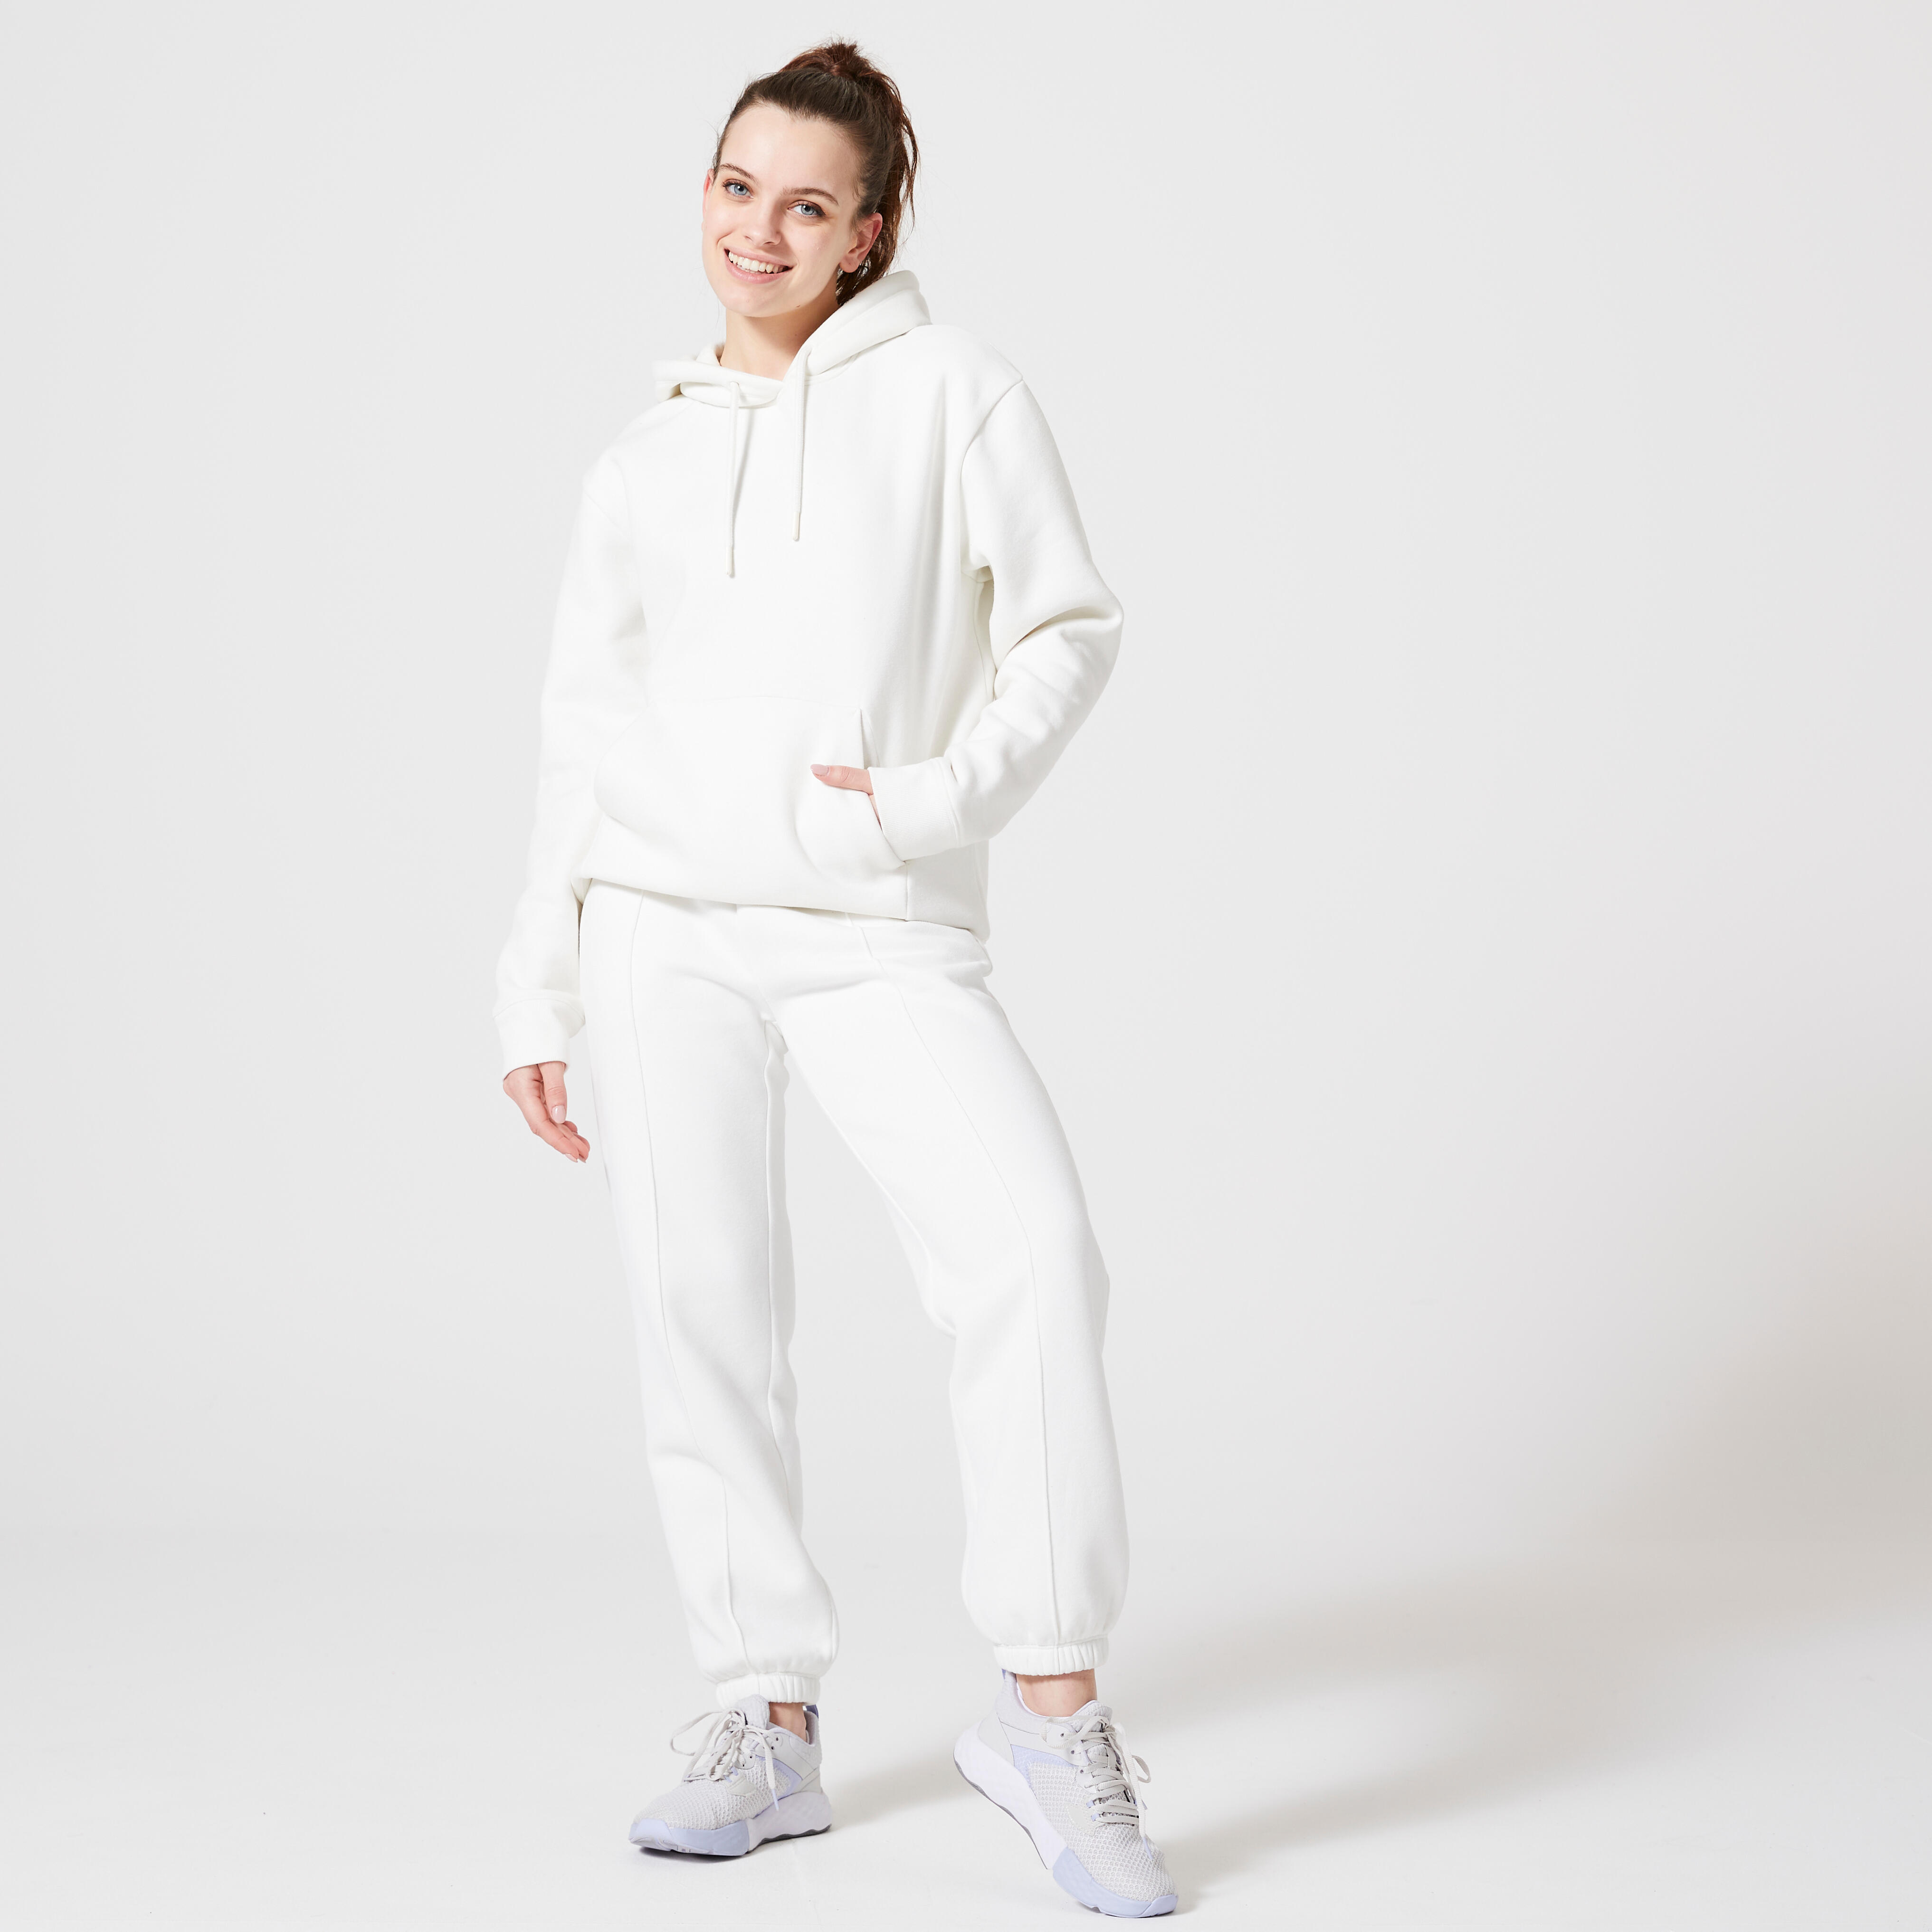 Pantalon de sport femme – 500 - Blanc cassé - Domyos - Décathlon